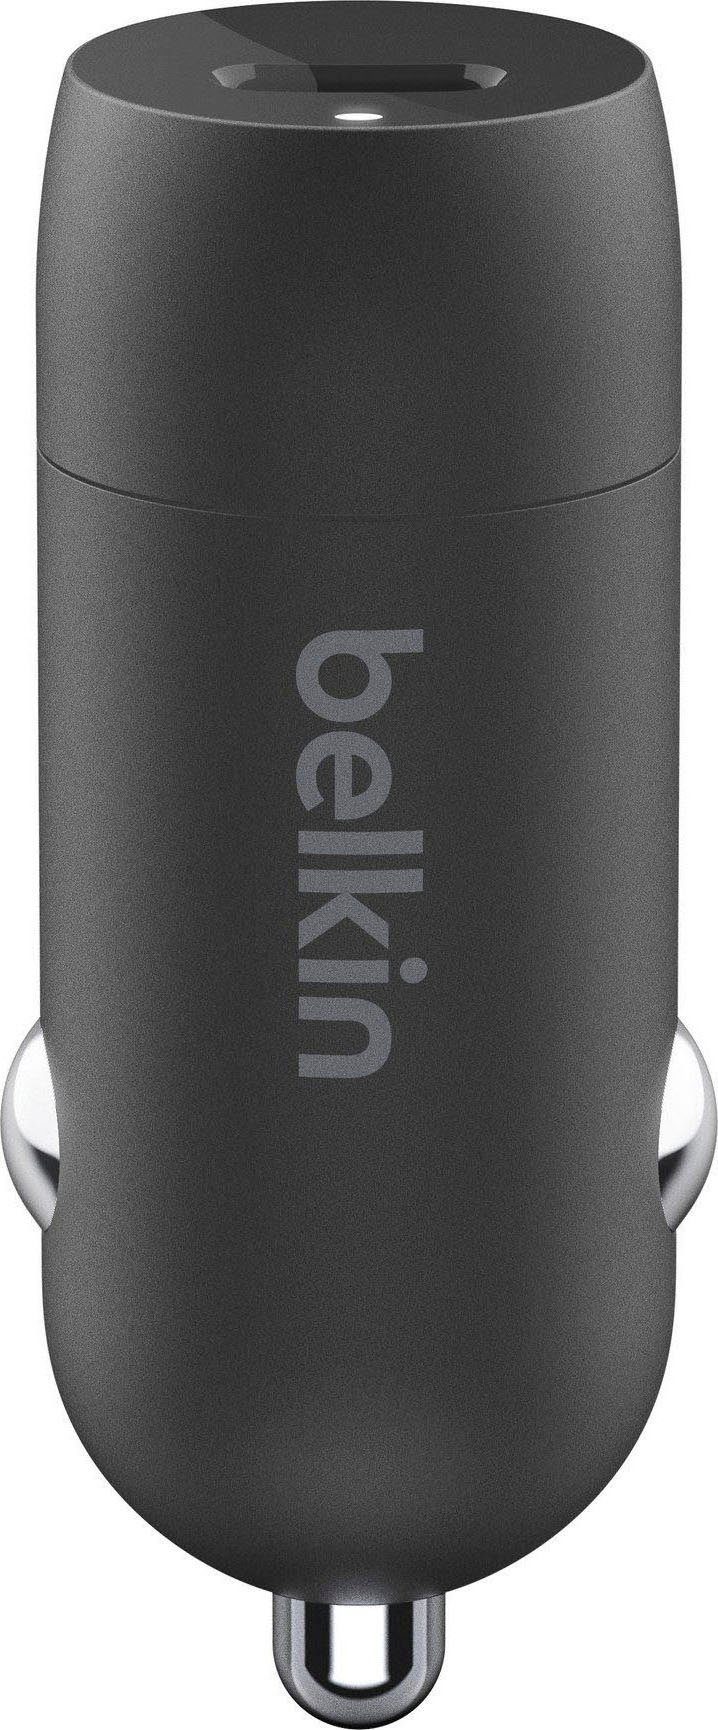 Belkin 20W mit Power Delivery USB-C Kfz-Ladegerät Autobatterie-Ladegerät